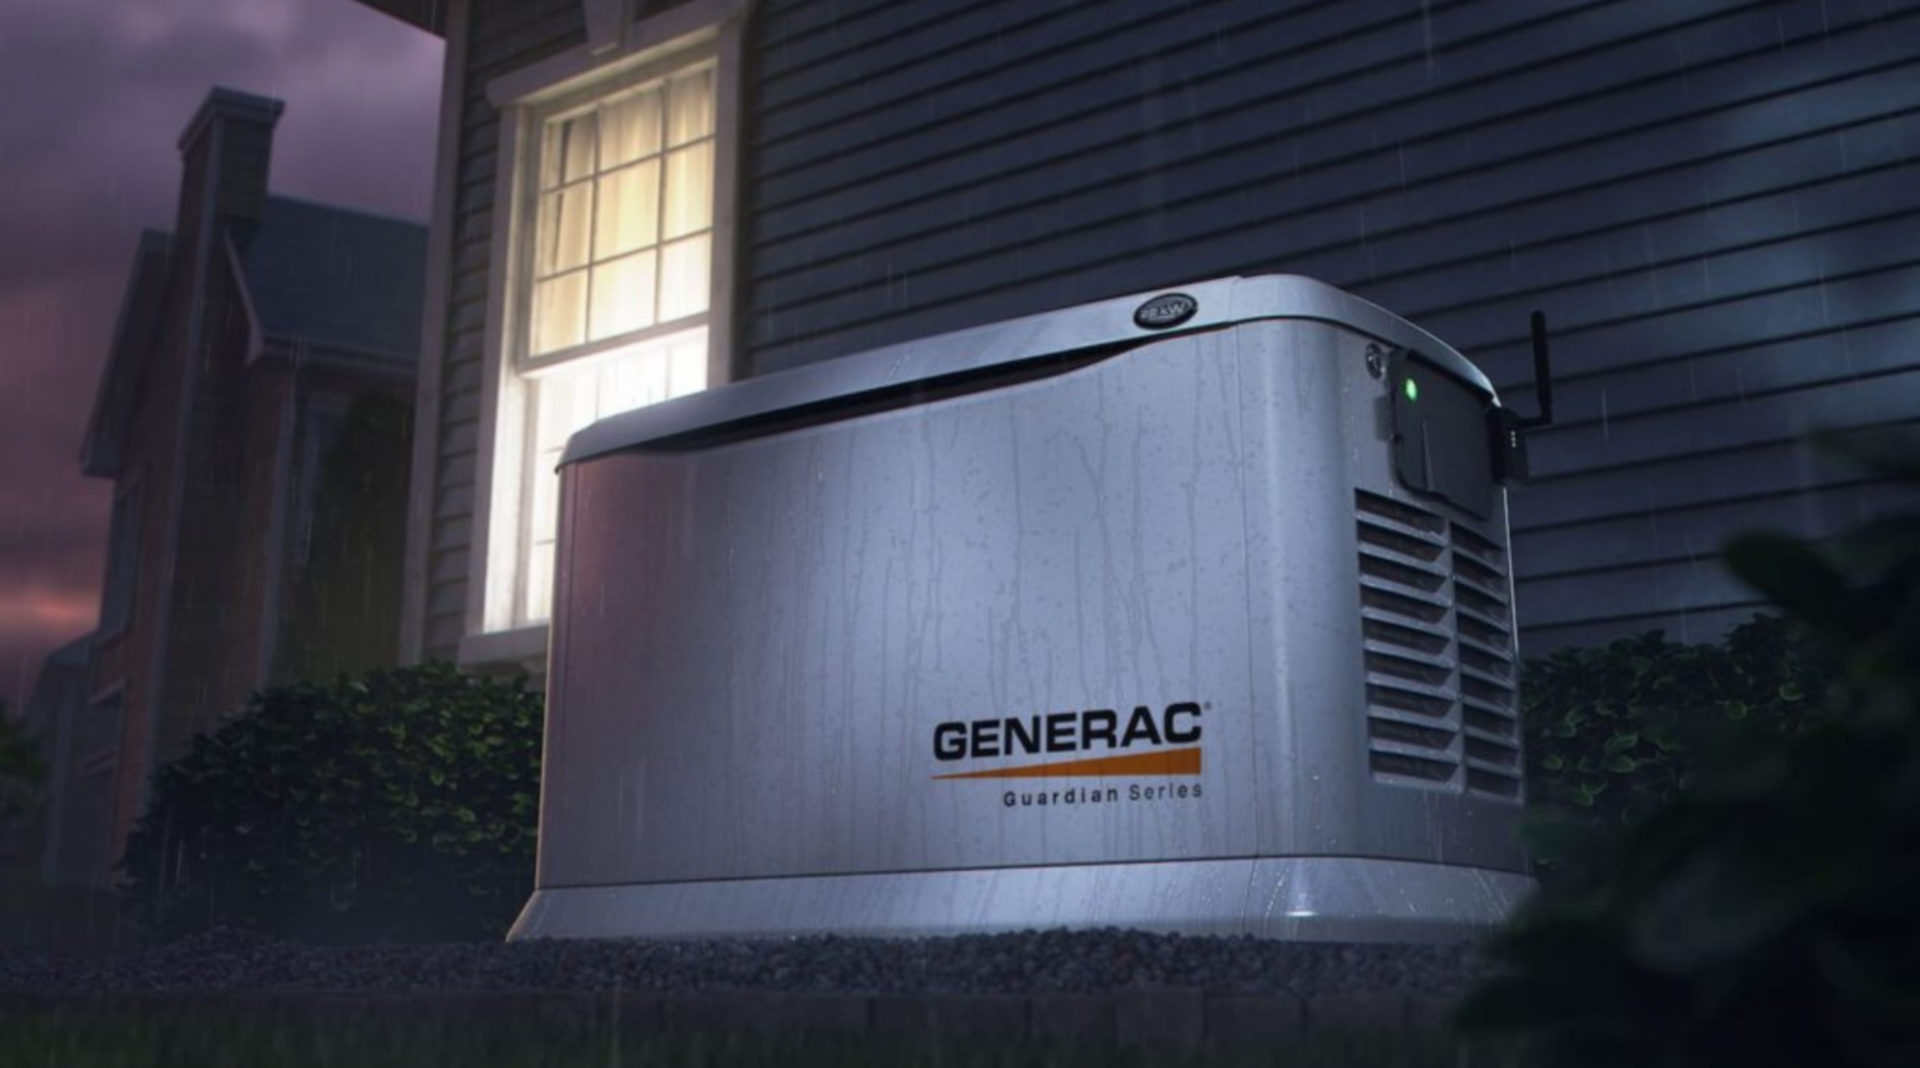 generac guardian series home standby generator